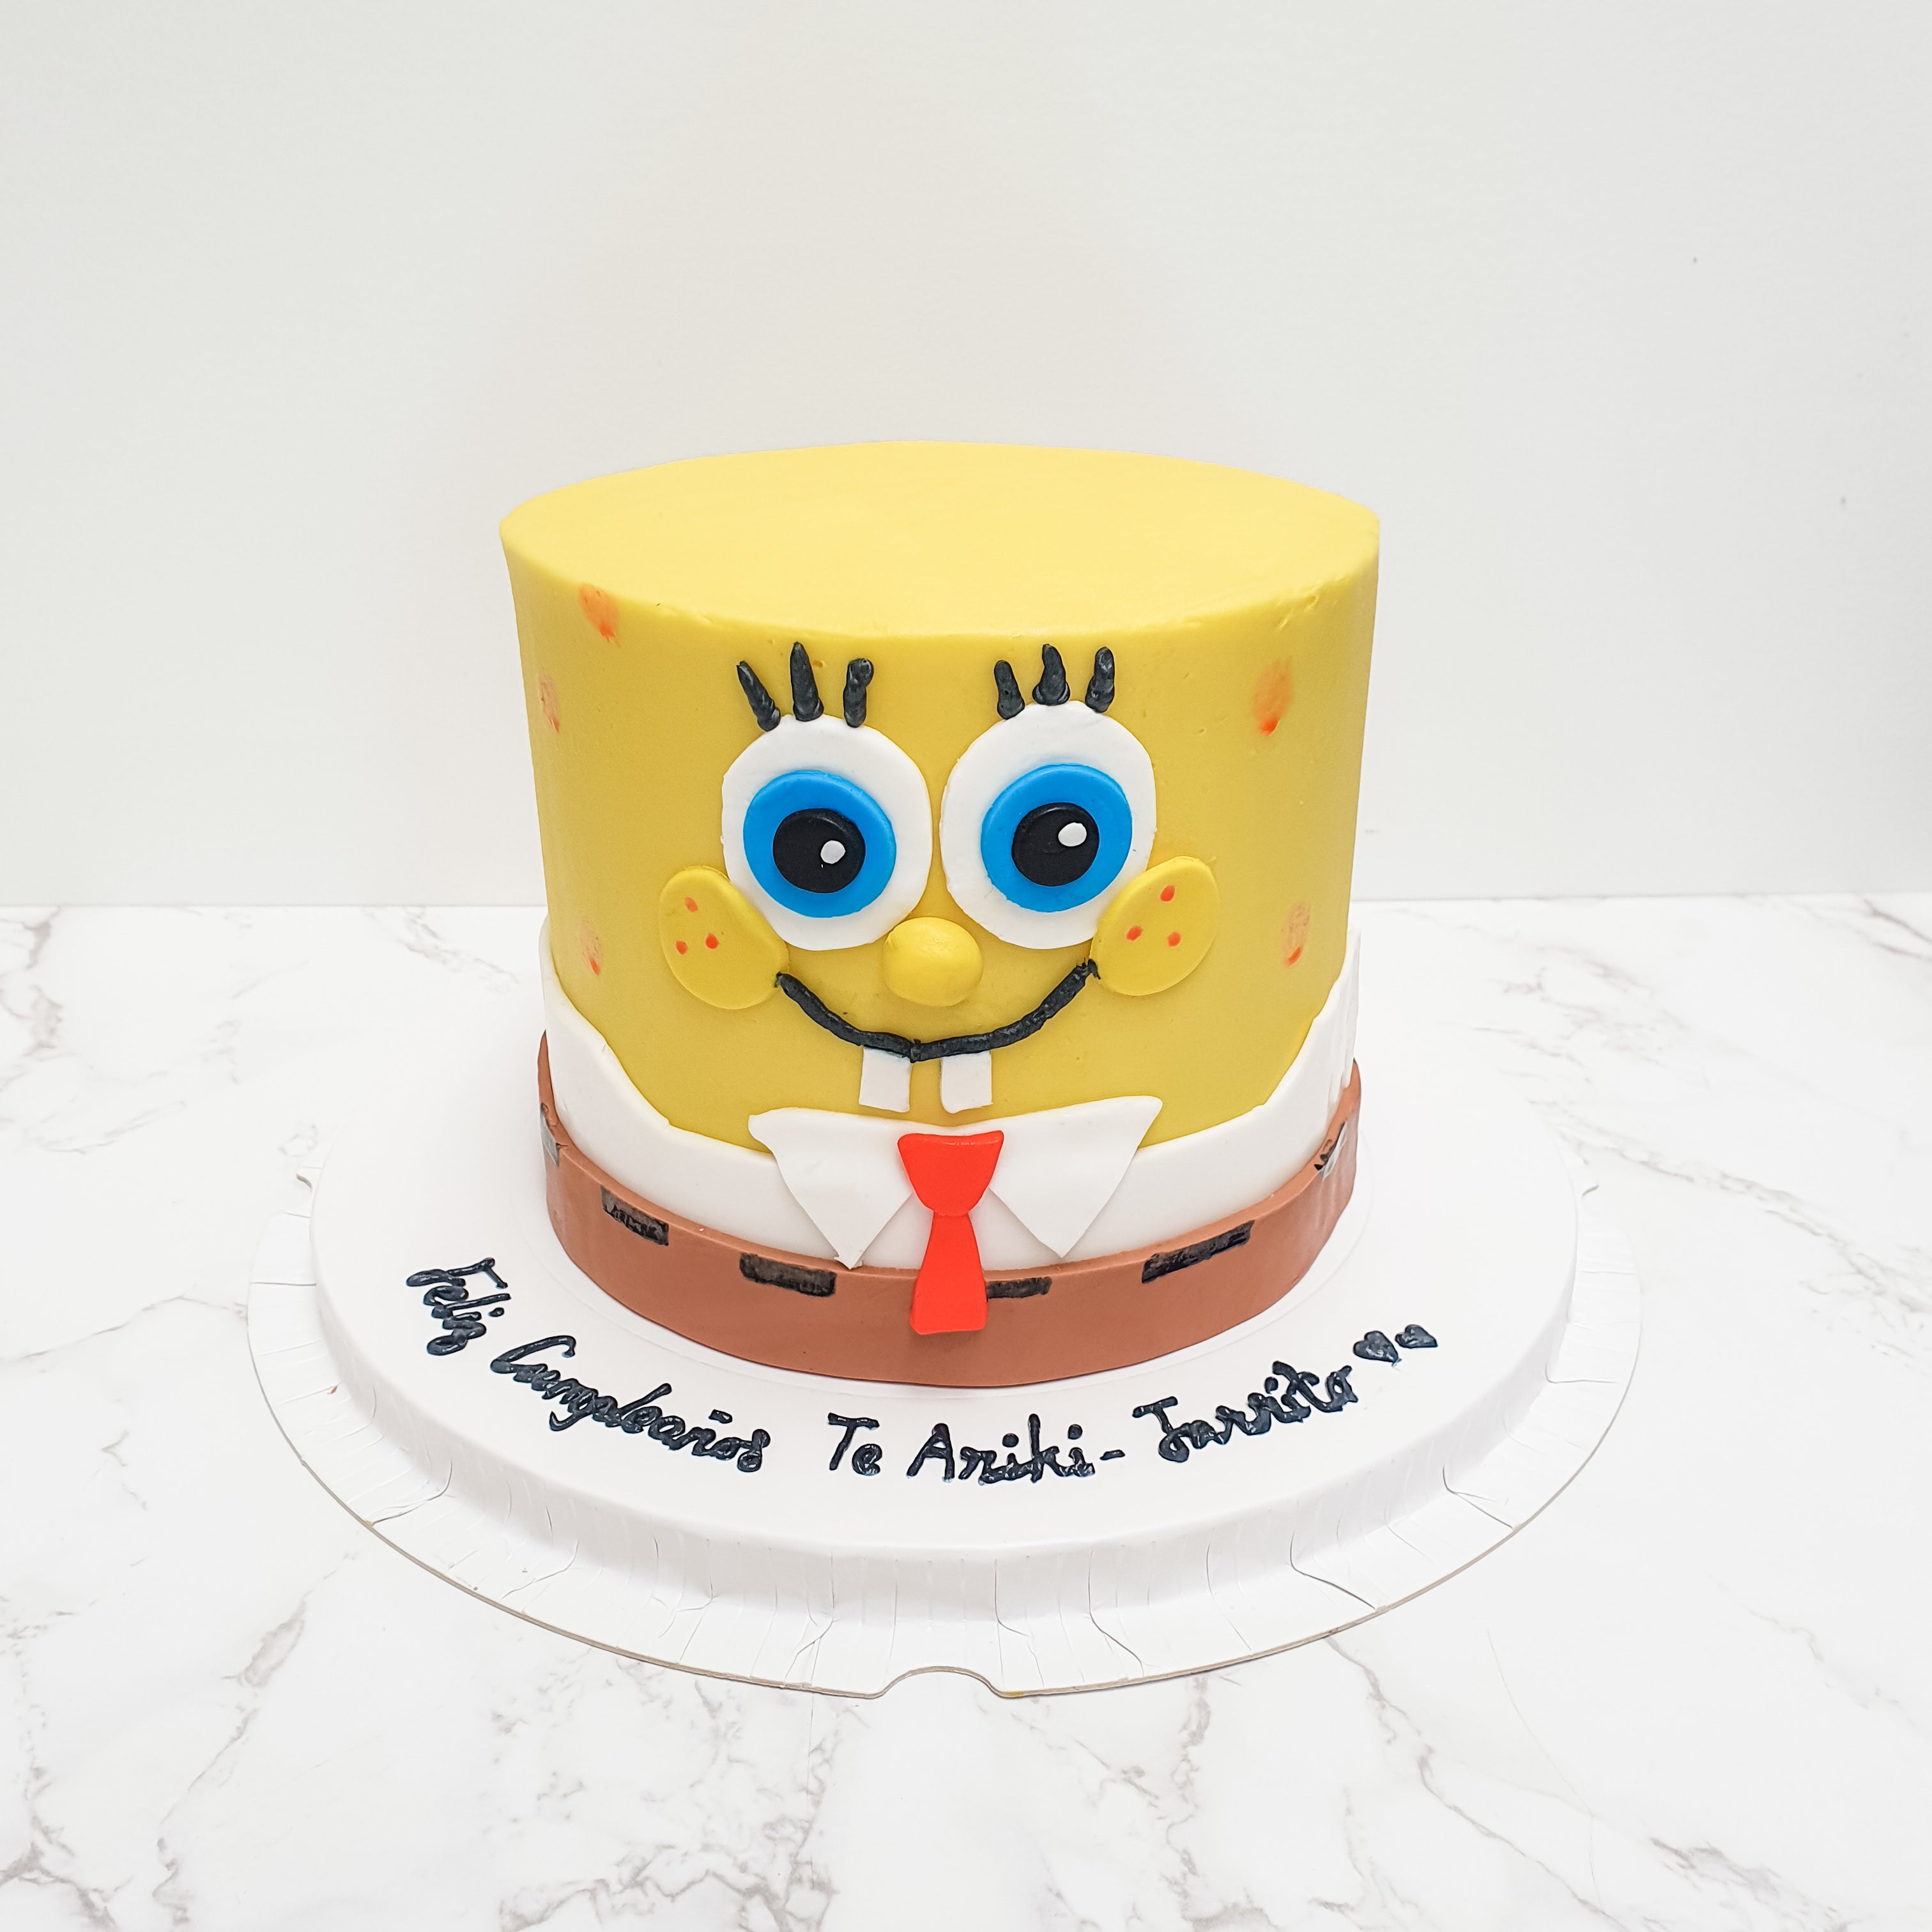 Spongebob Cake - The Cakeroom Bakery Shop